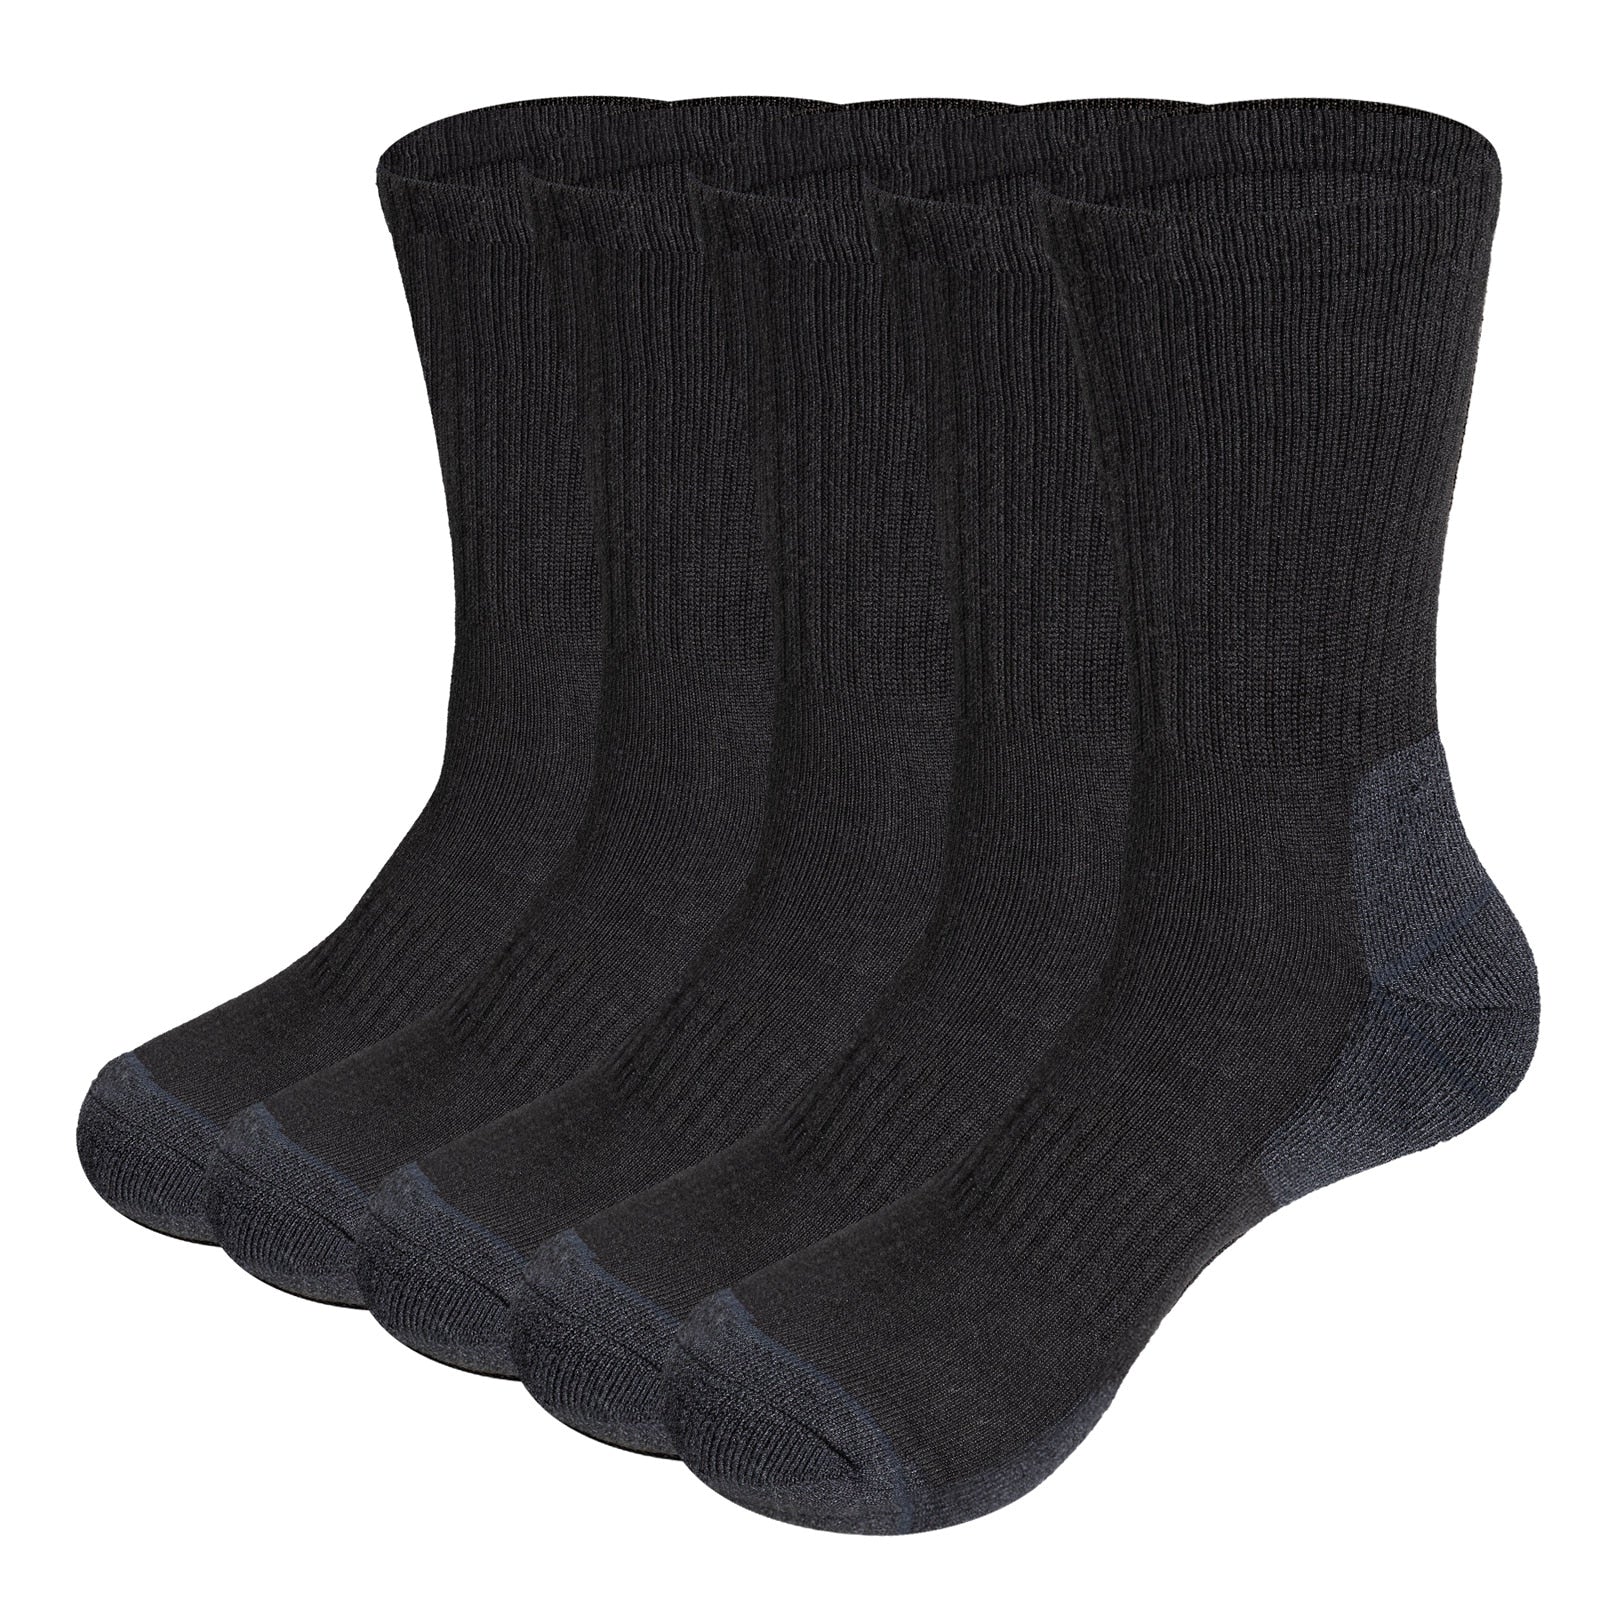 Buy black 5 Pairs Moisture Wicking Mid Calf Thermal Hiking &amp; Trekking Socks